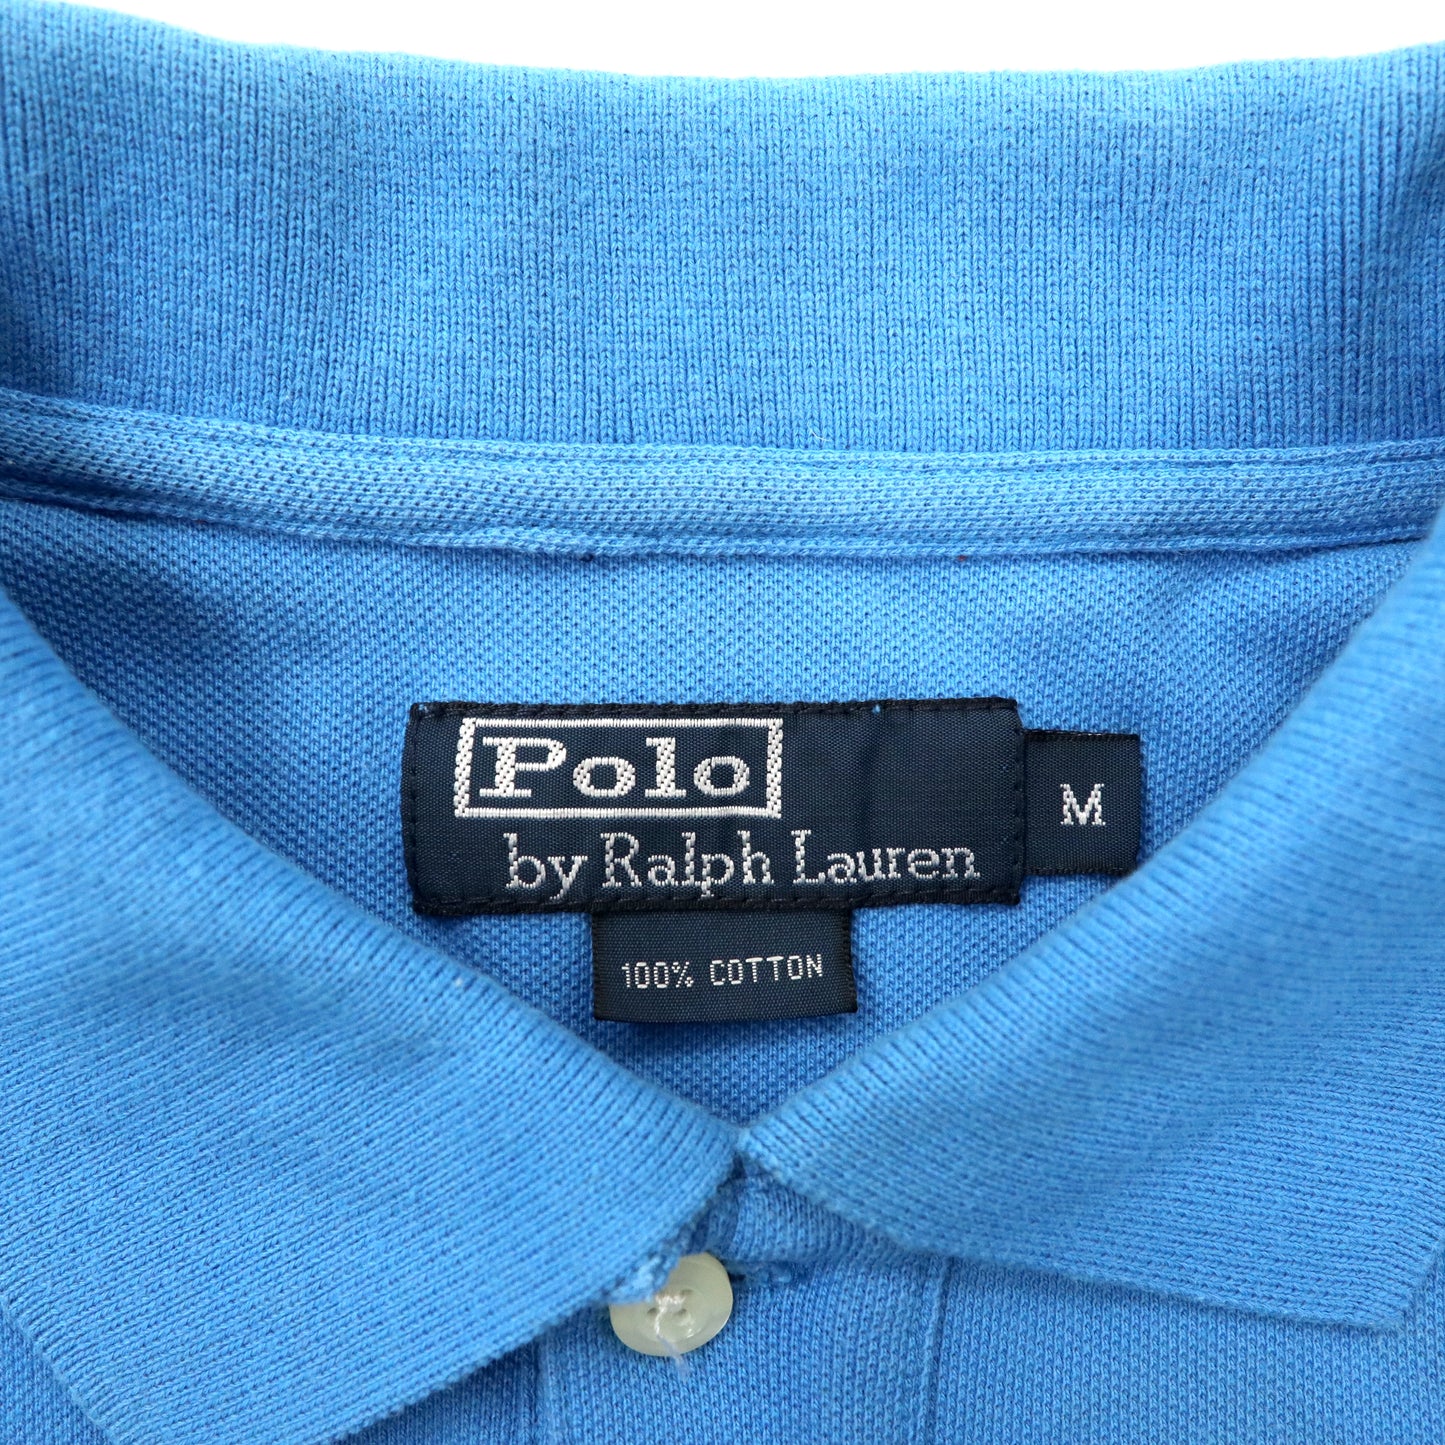 Polo by Ralph Lauren ポロシャツ M ブルー コットン スモールポニー刺繍